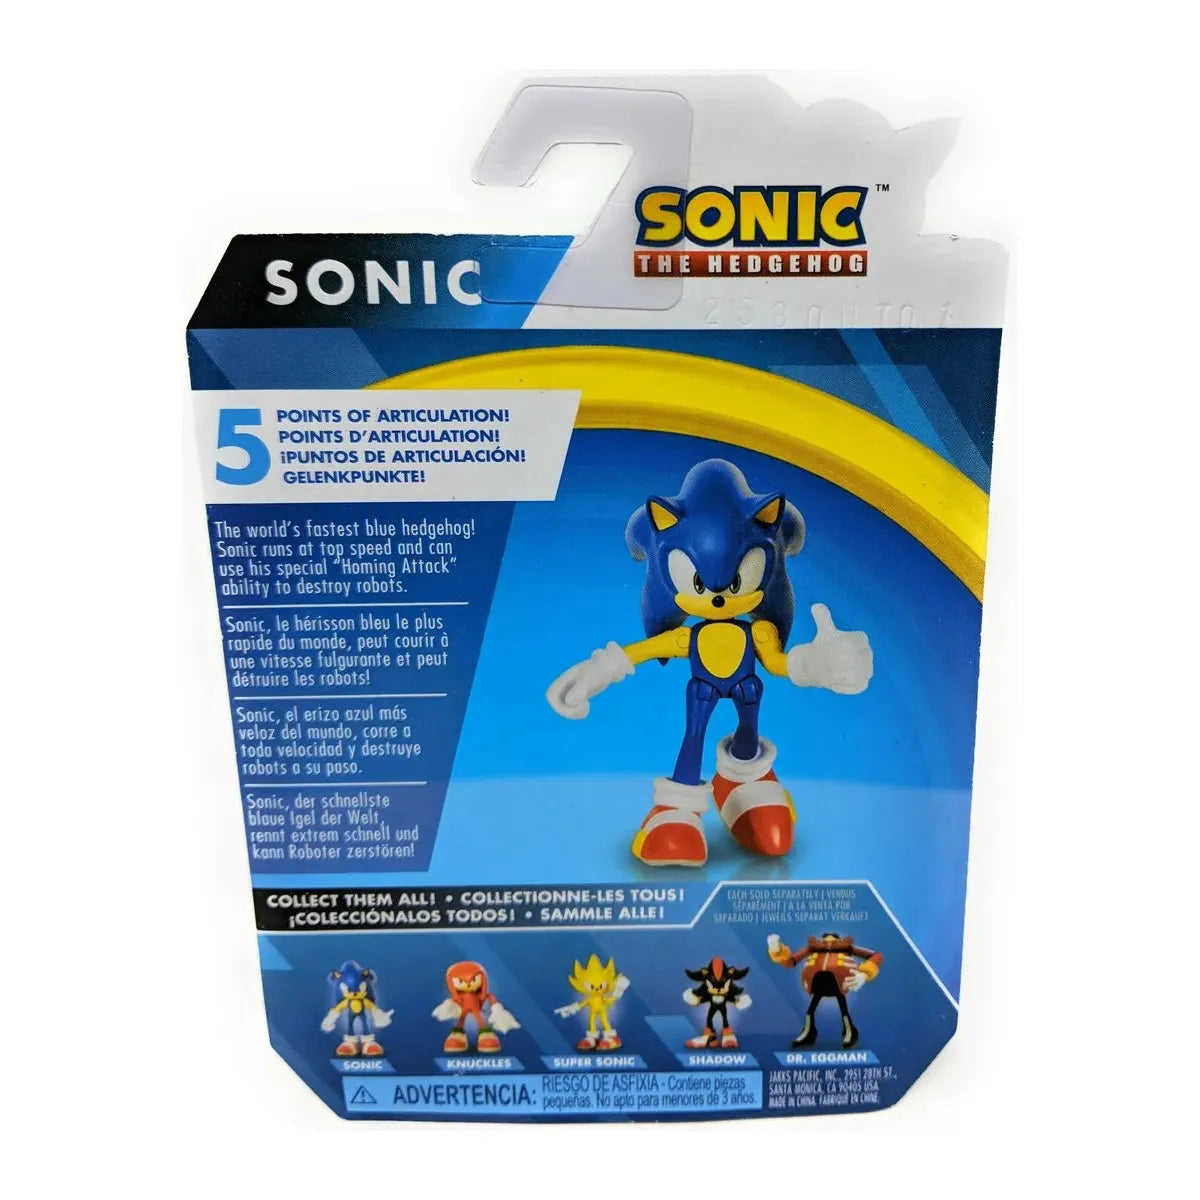 Sonic the Hedgehog Sonic Mini Action Figure by Jakks